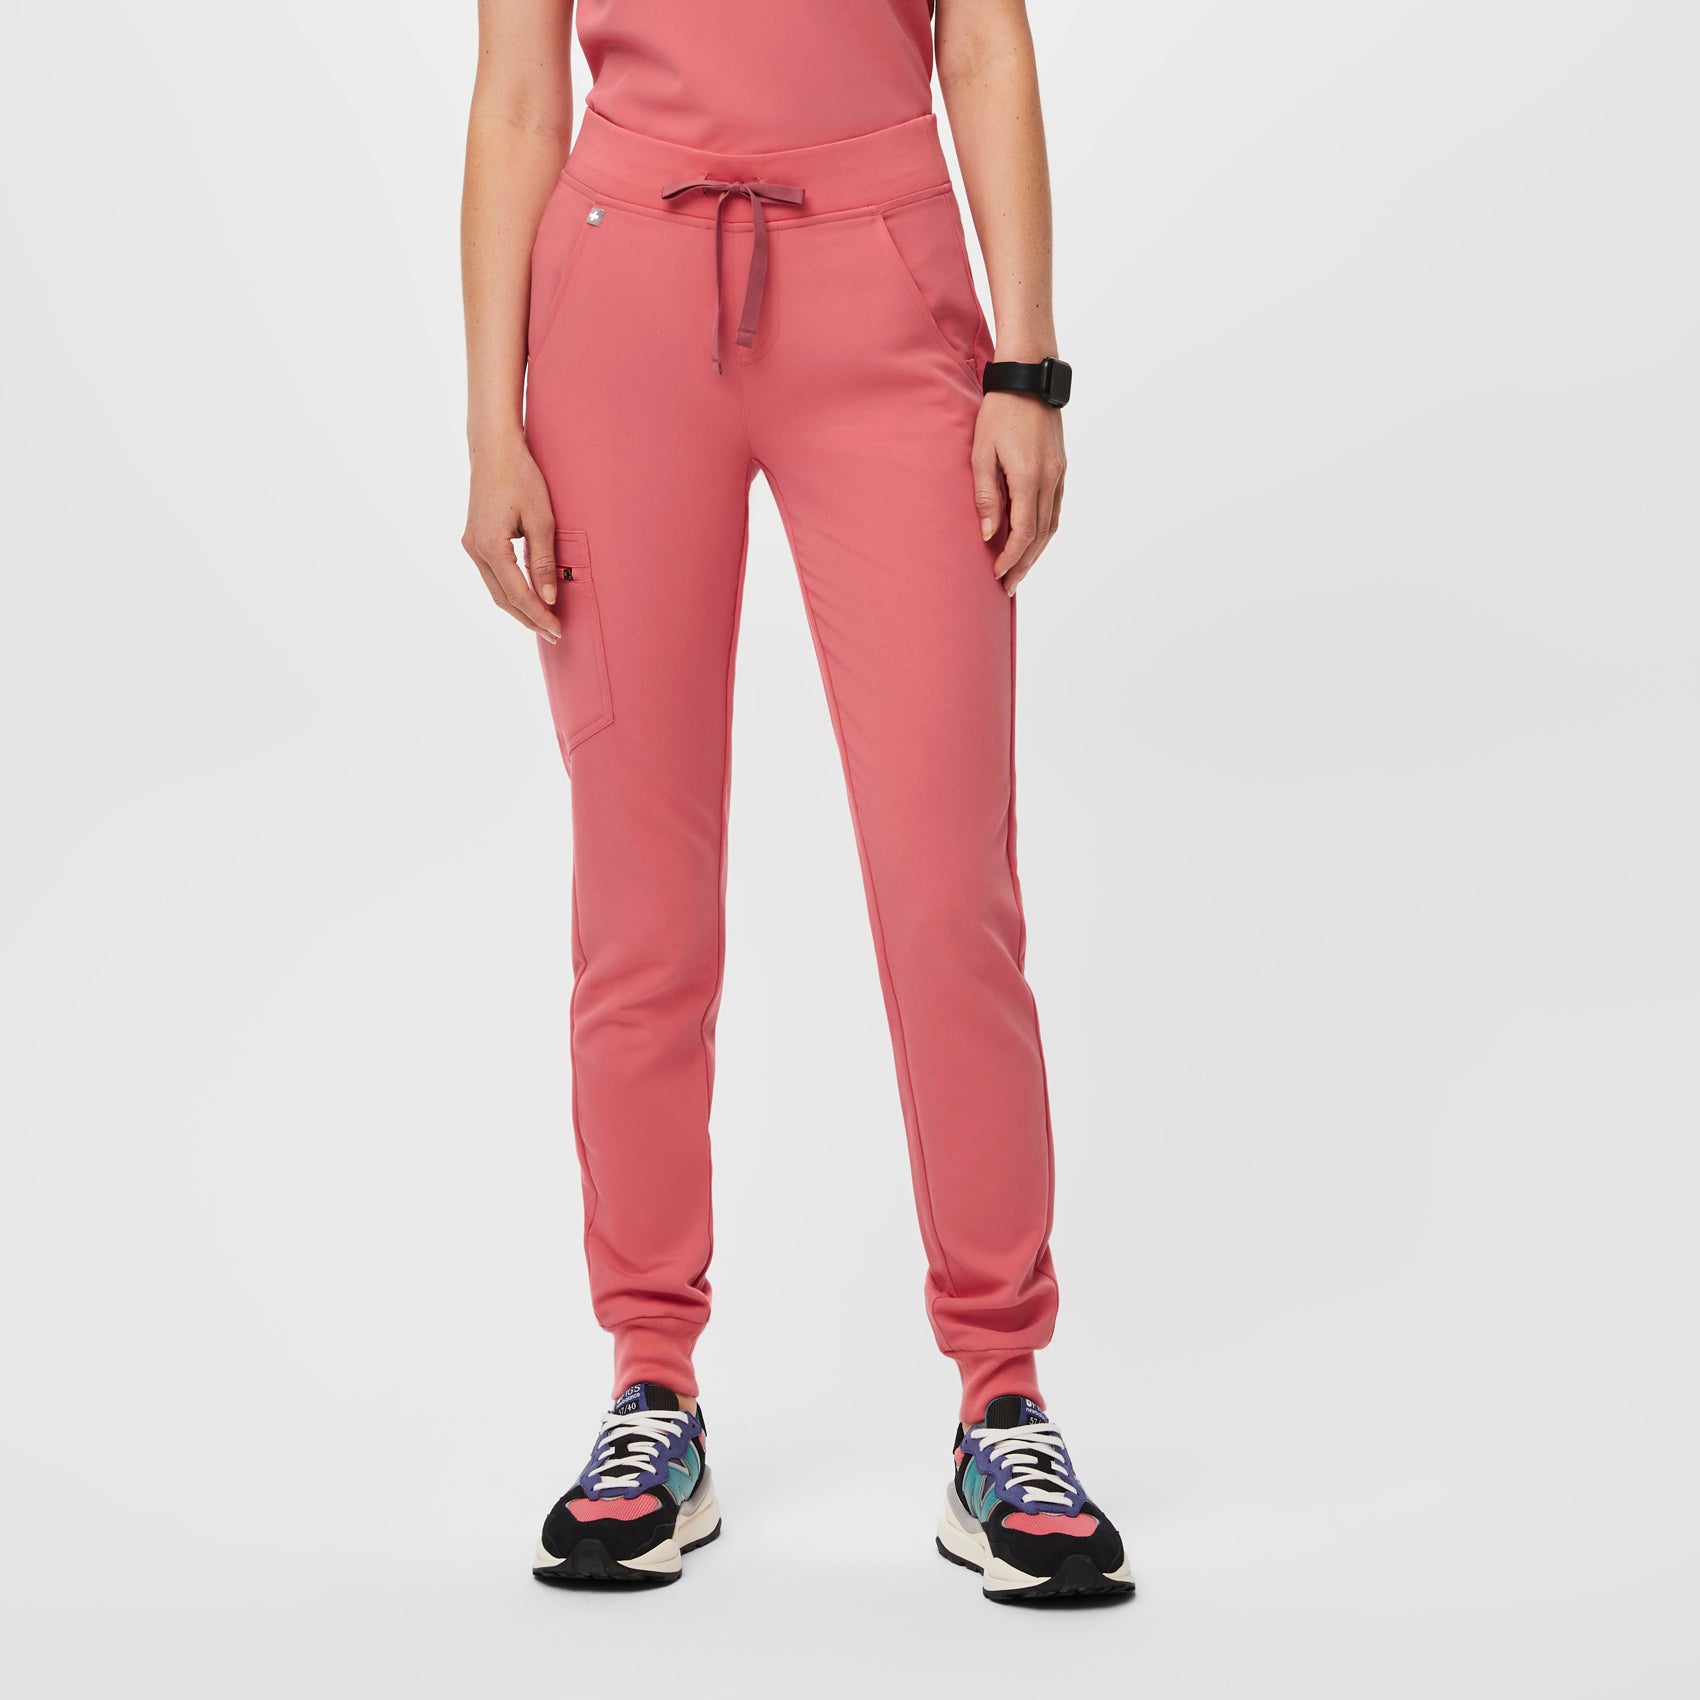 Pantalón deportivo de uniforme médico Zamora™ para mujer - Rosa desierto ·  FIGS